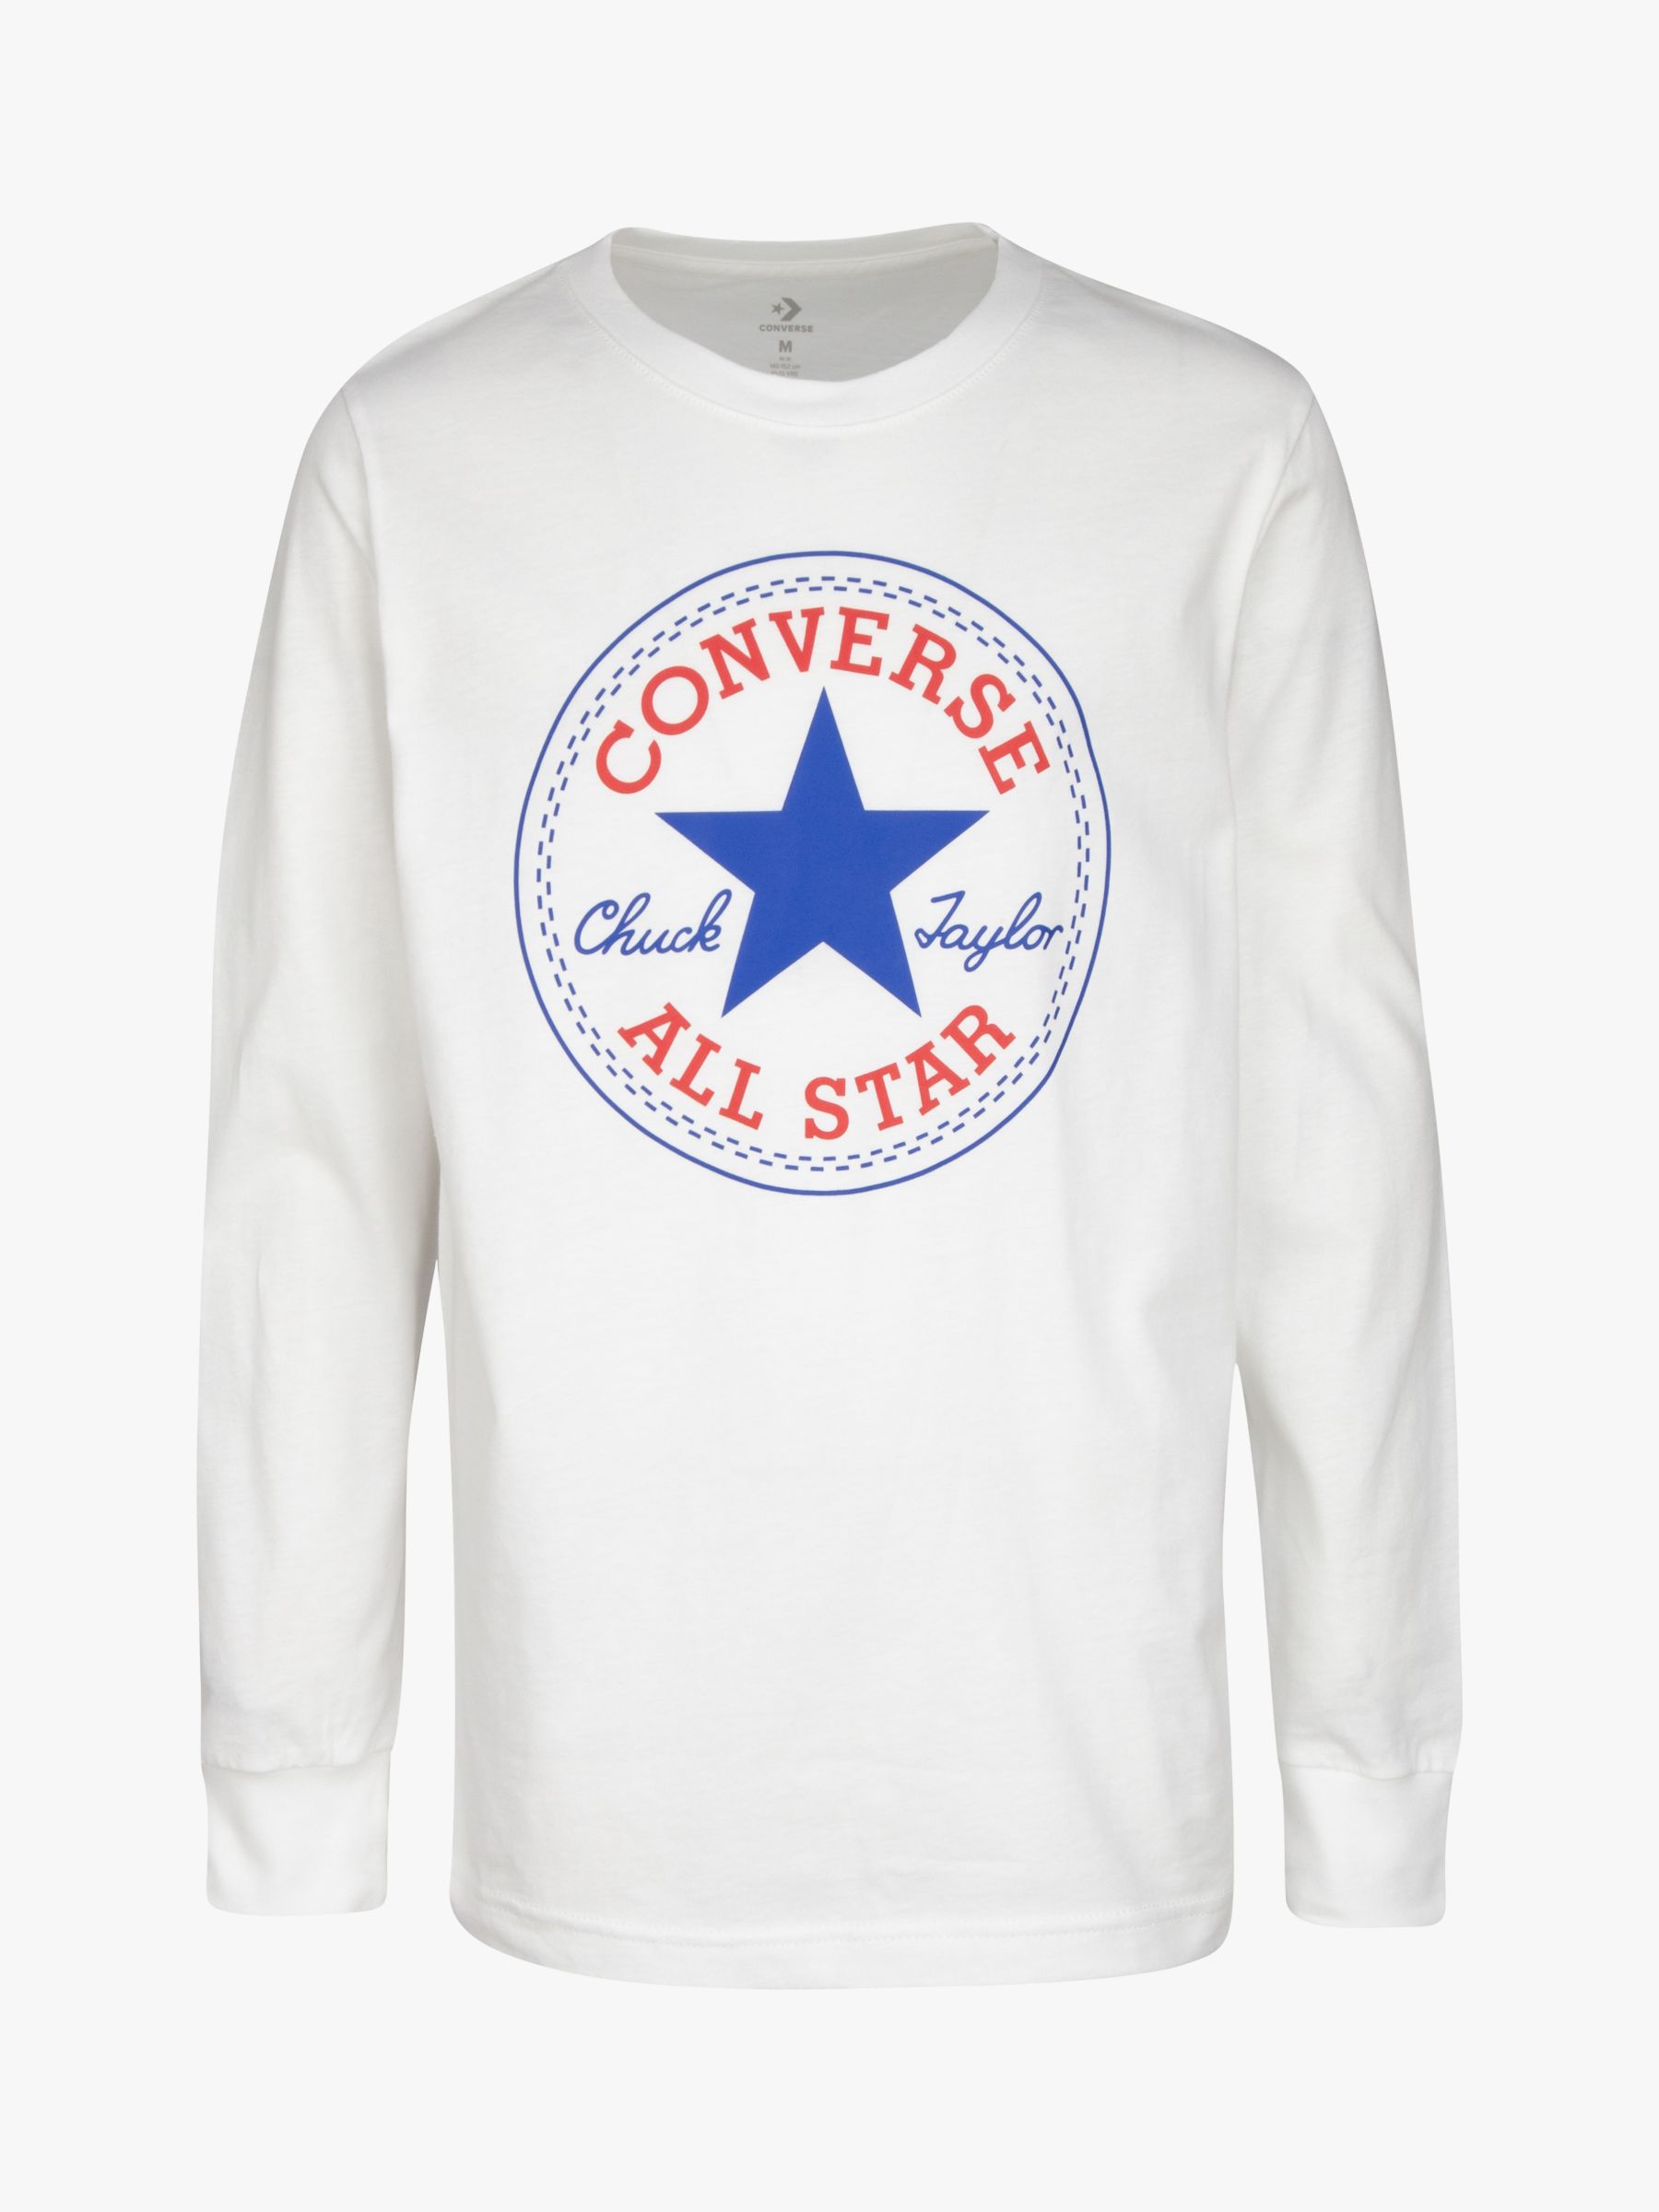 white converse sweatshirt